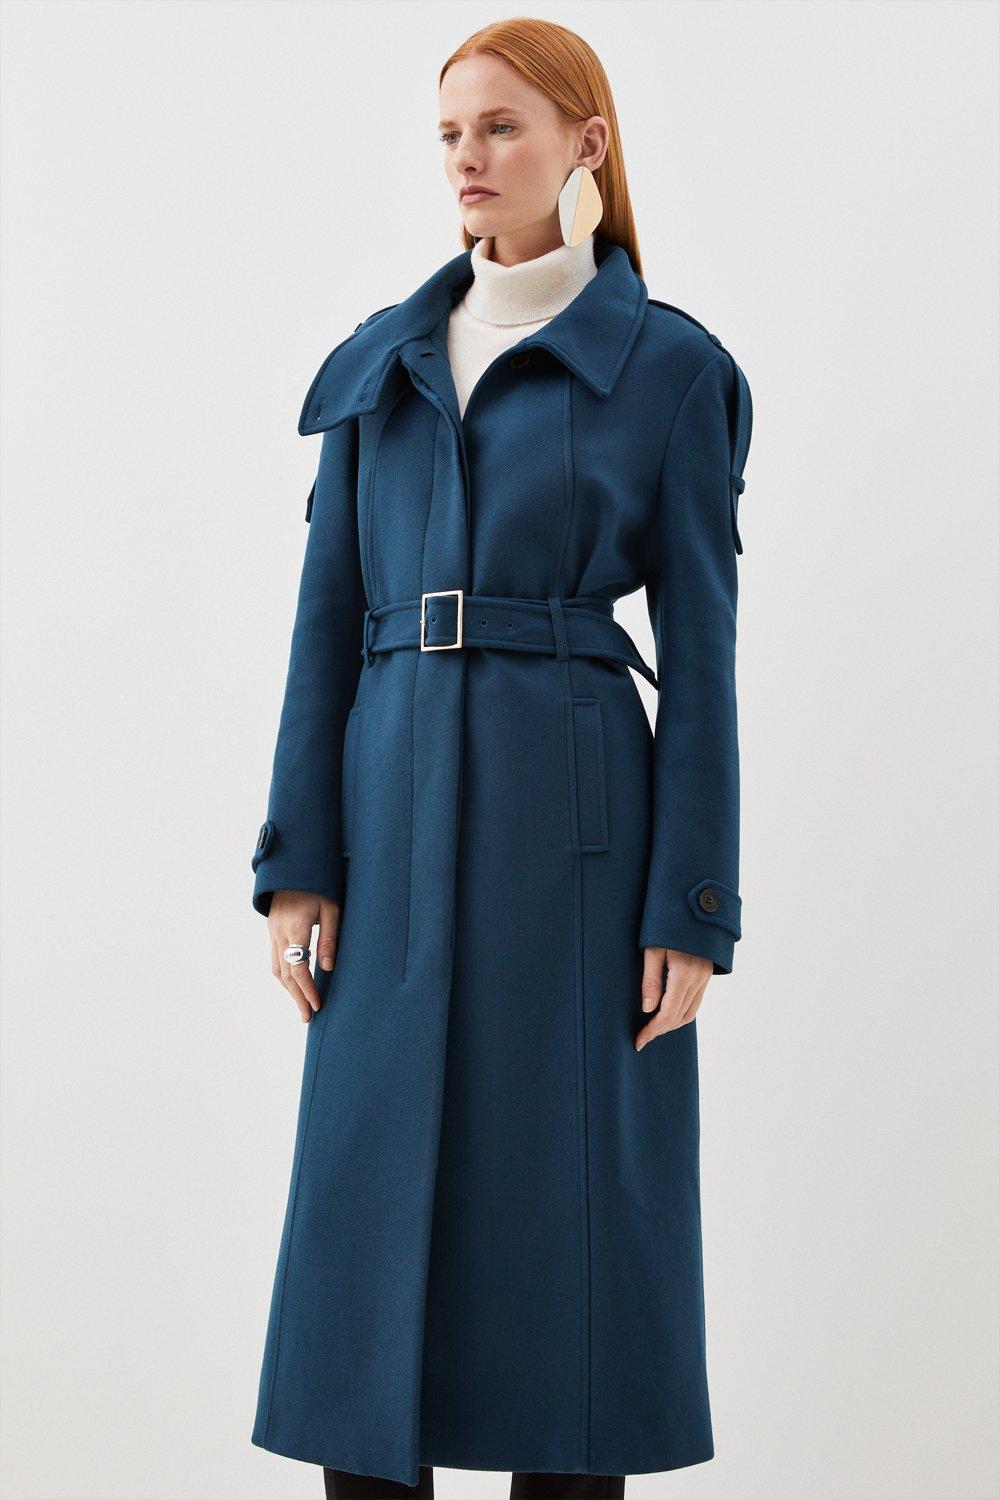 Jackets & Coats | Italian Manteco Wool Blend Tailored Epaulette Detail ...